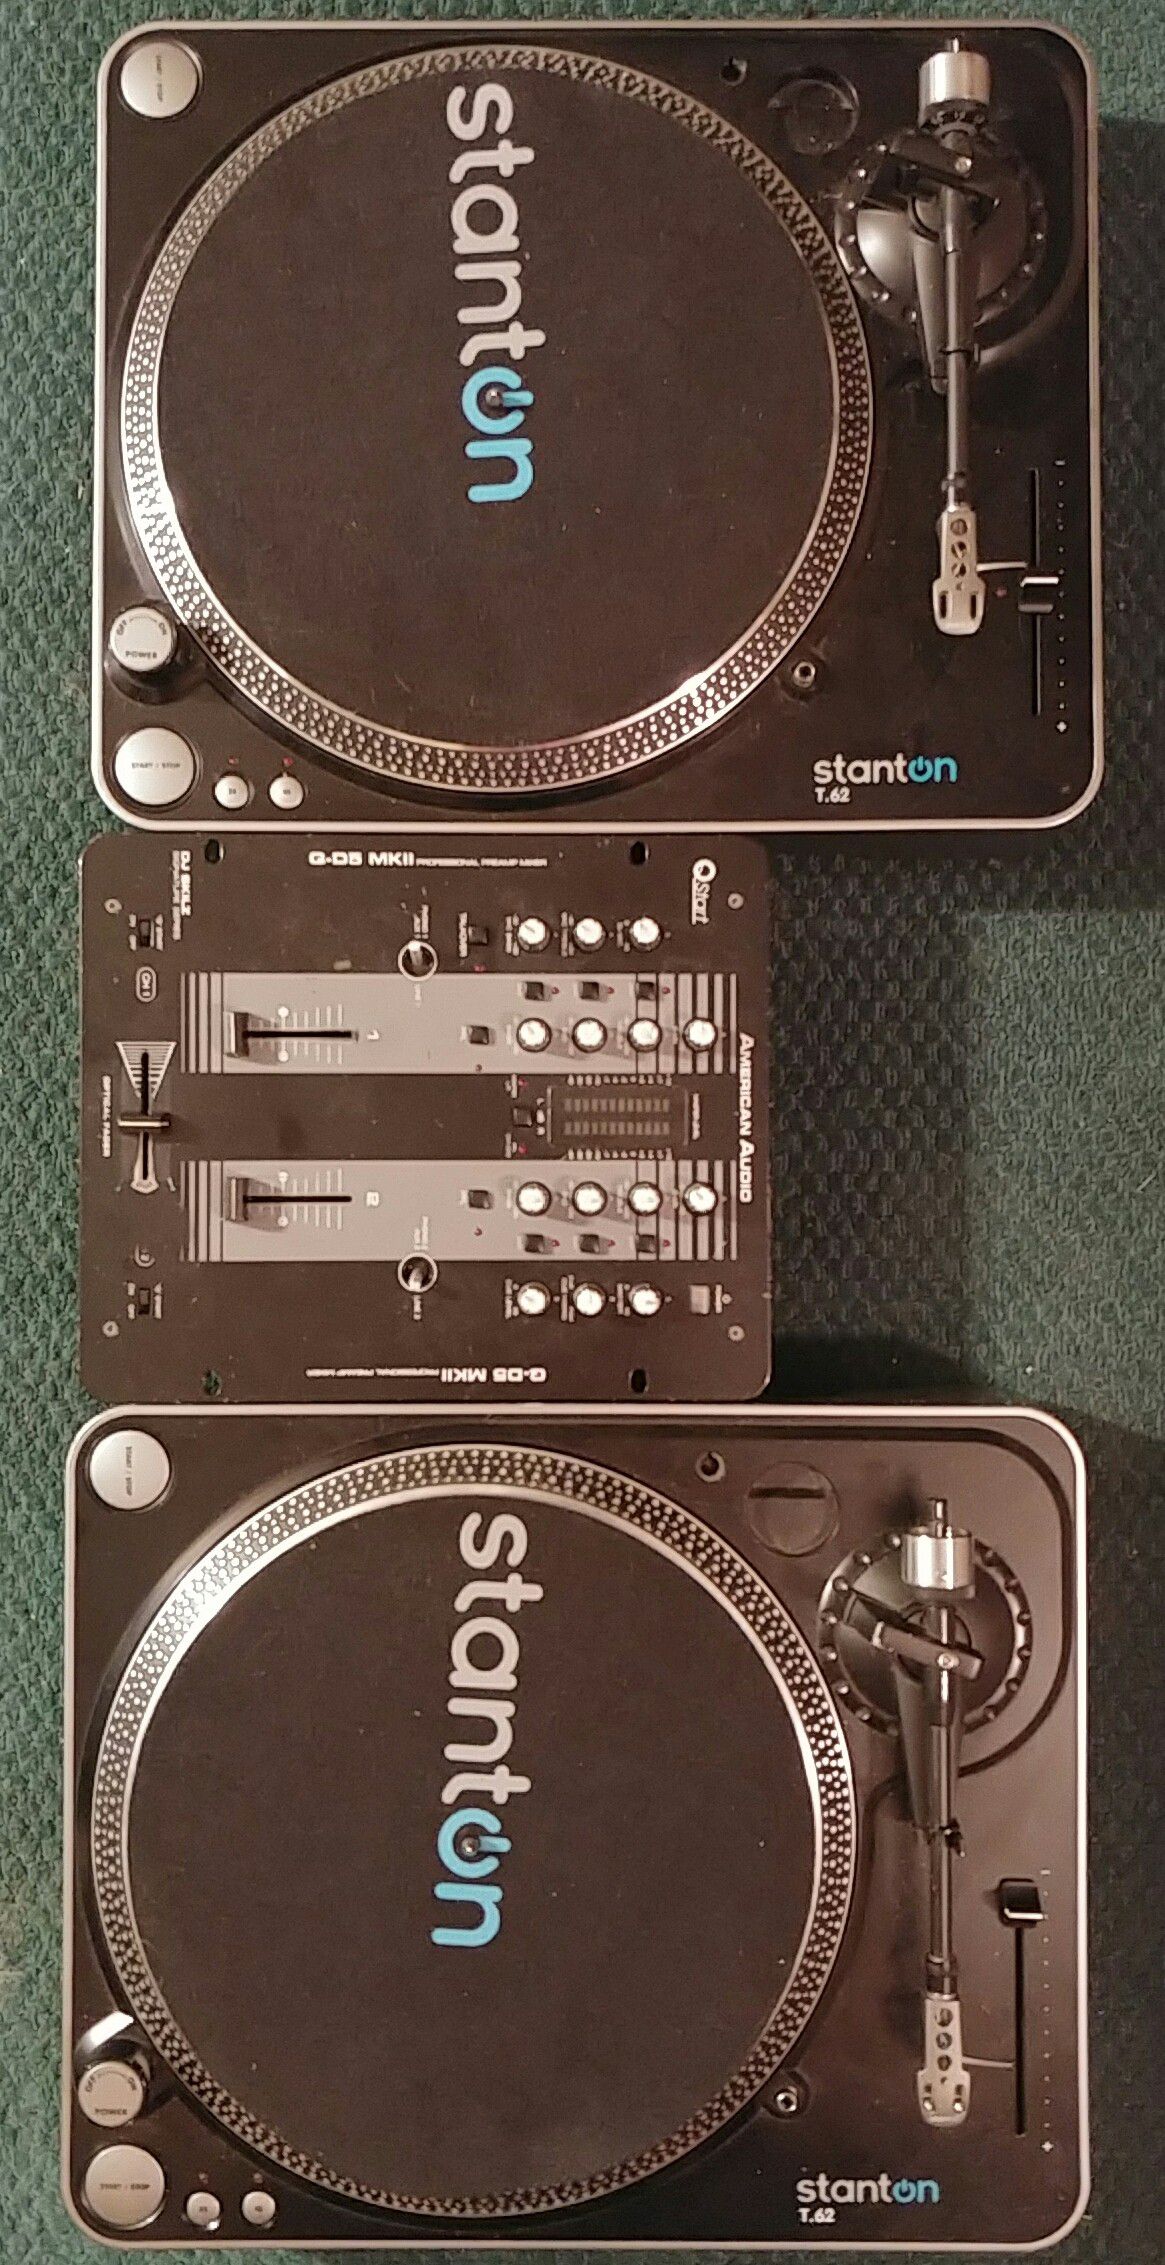 2 Stanton t62 turntables/complete DJ setup